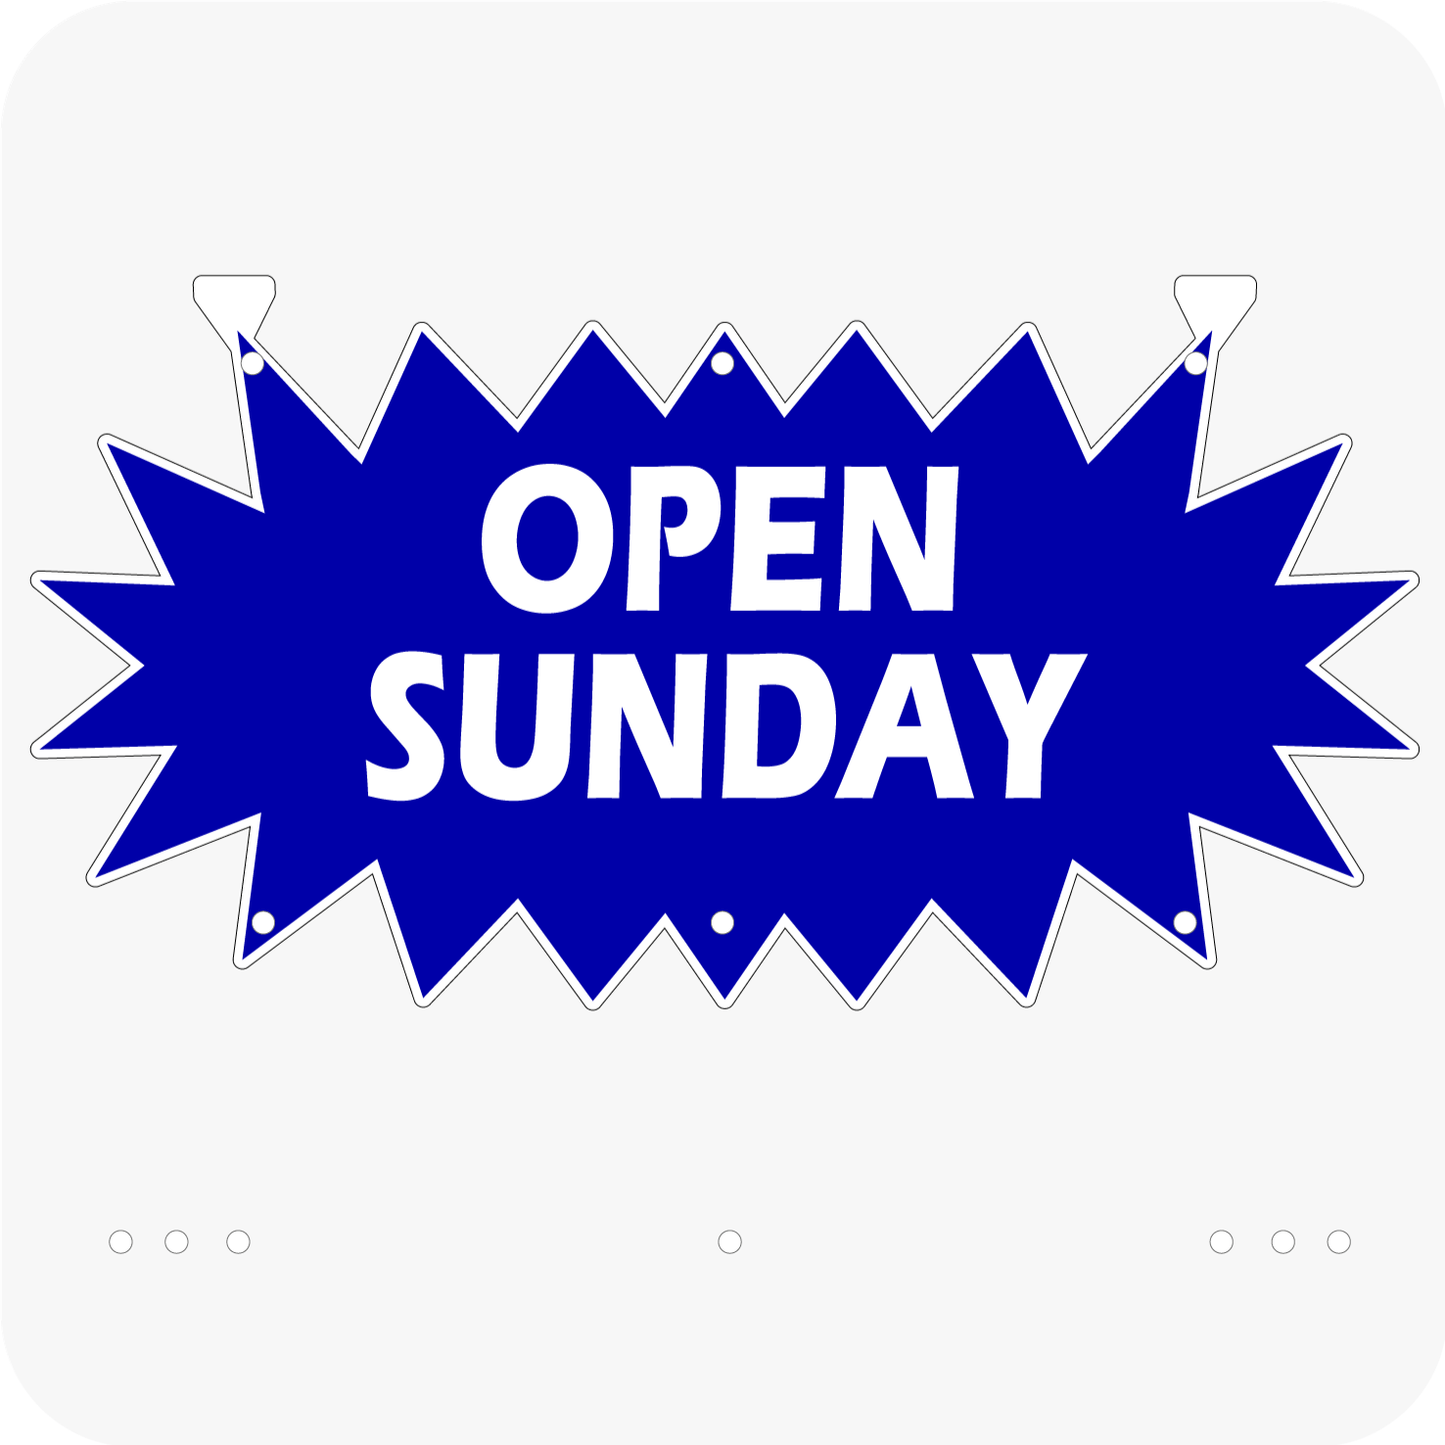 Open Sunday 12 x 24 Corrugated Star Rider - Blue